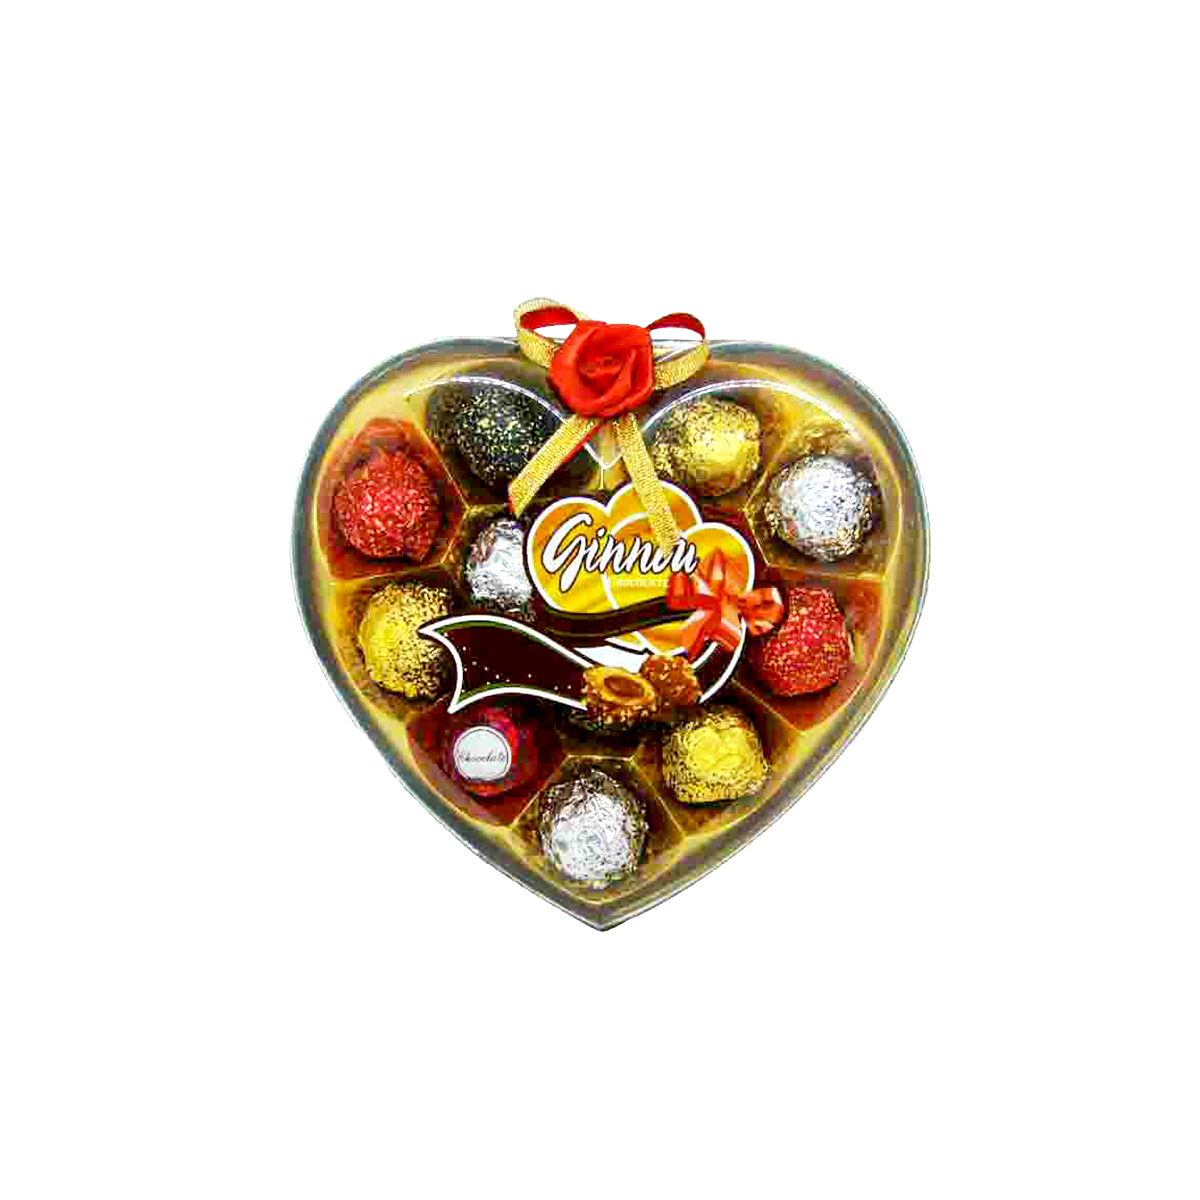 Ginnou Chocolate Heart Box 88gm Best gift for Birthday & Valentine Day